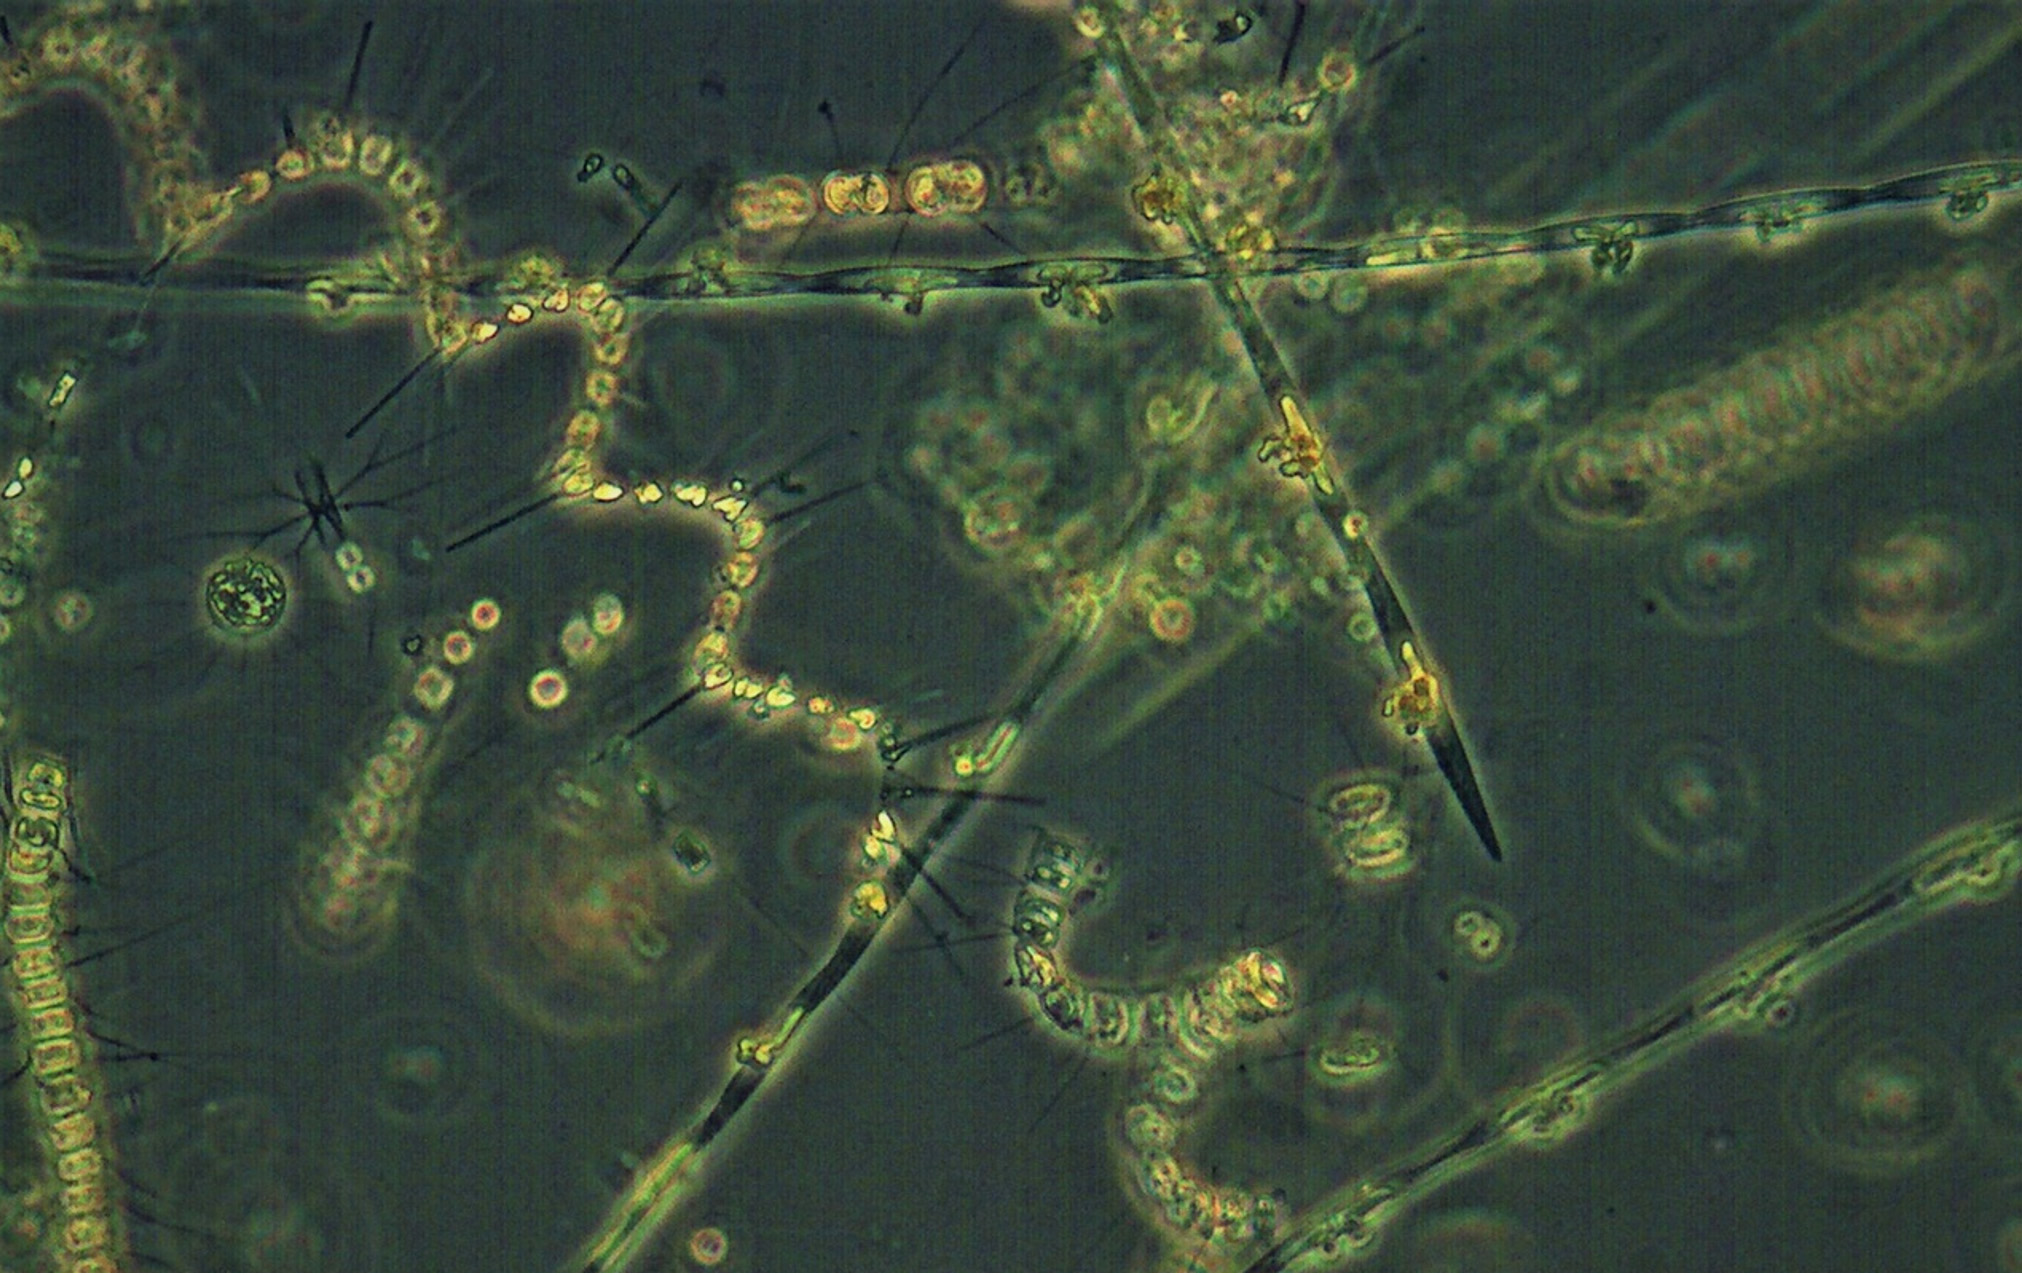 microscope image of phytoplankton